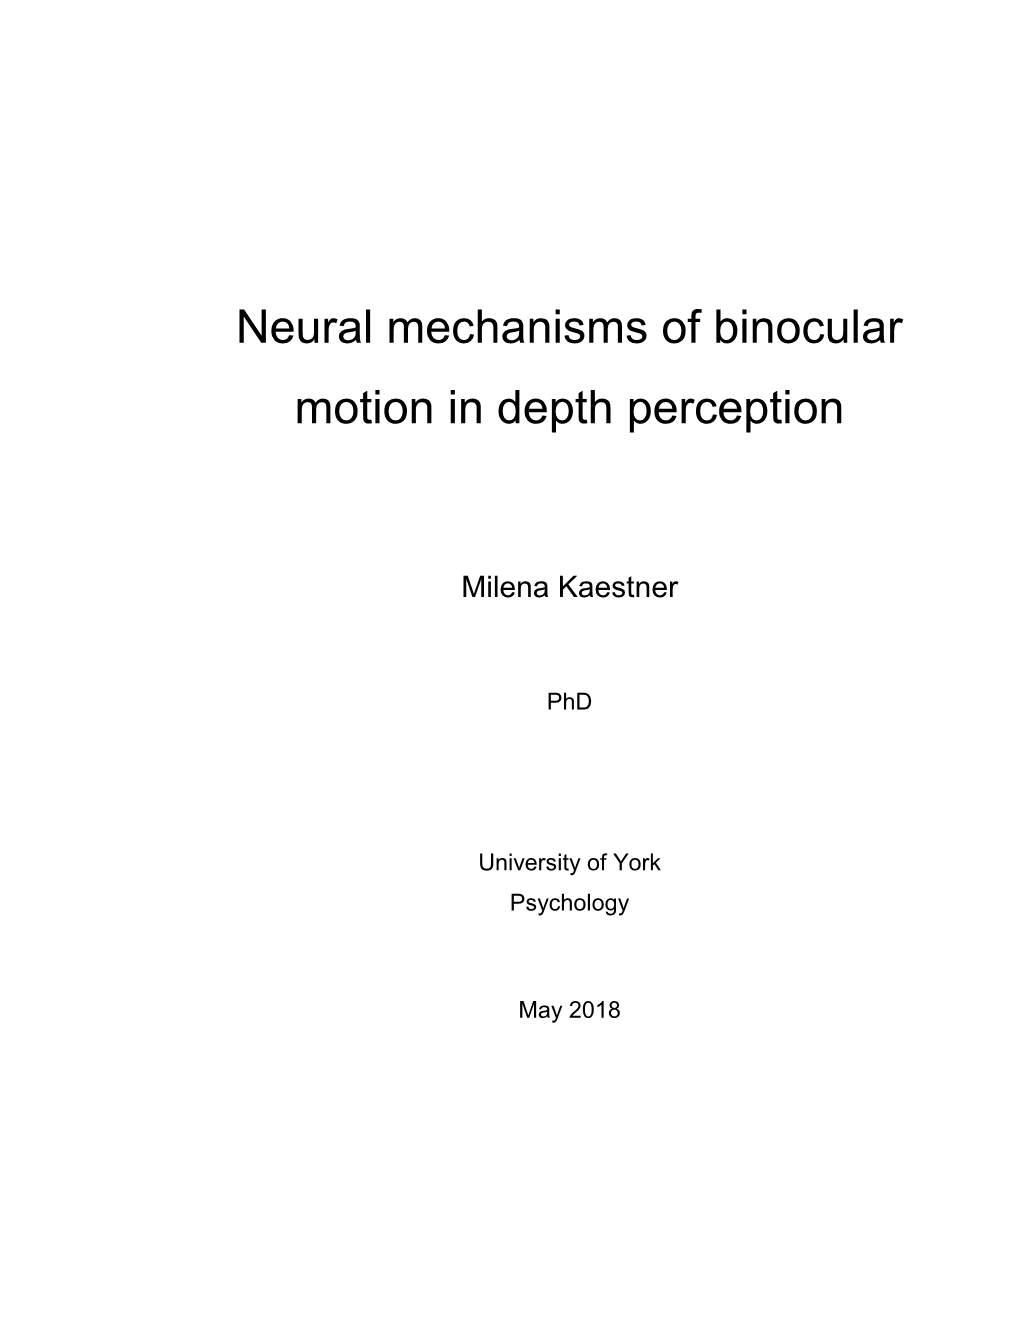 Neural Mechanisms of Binocular Motion in Depth Perception